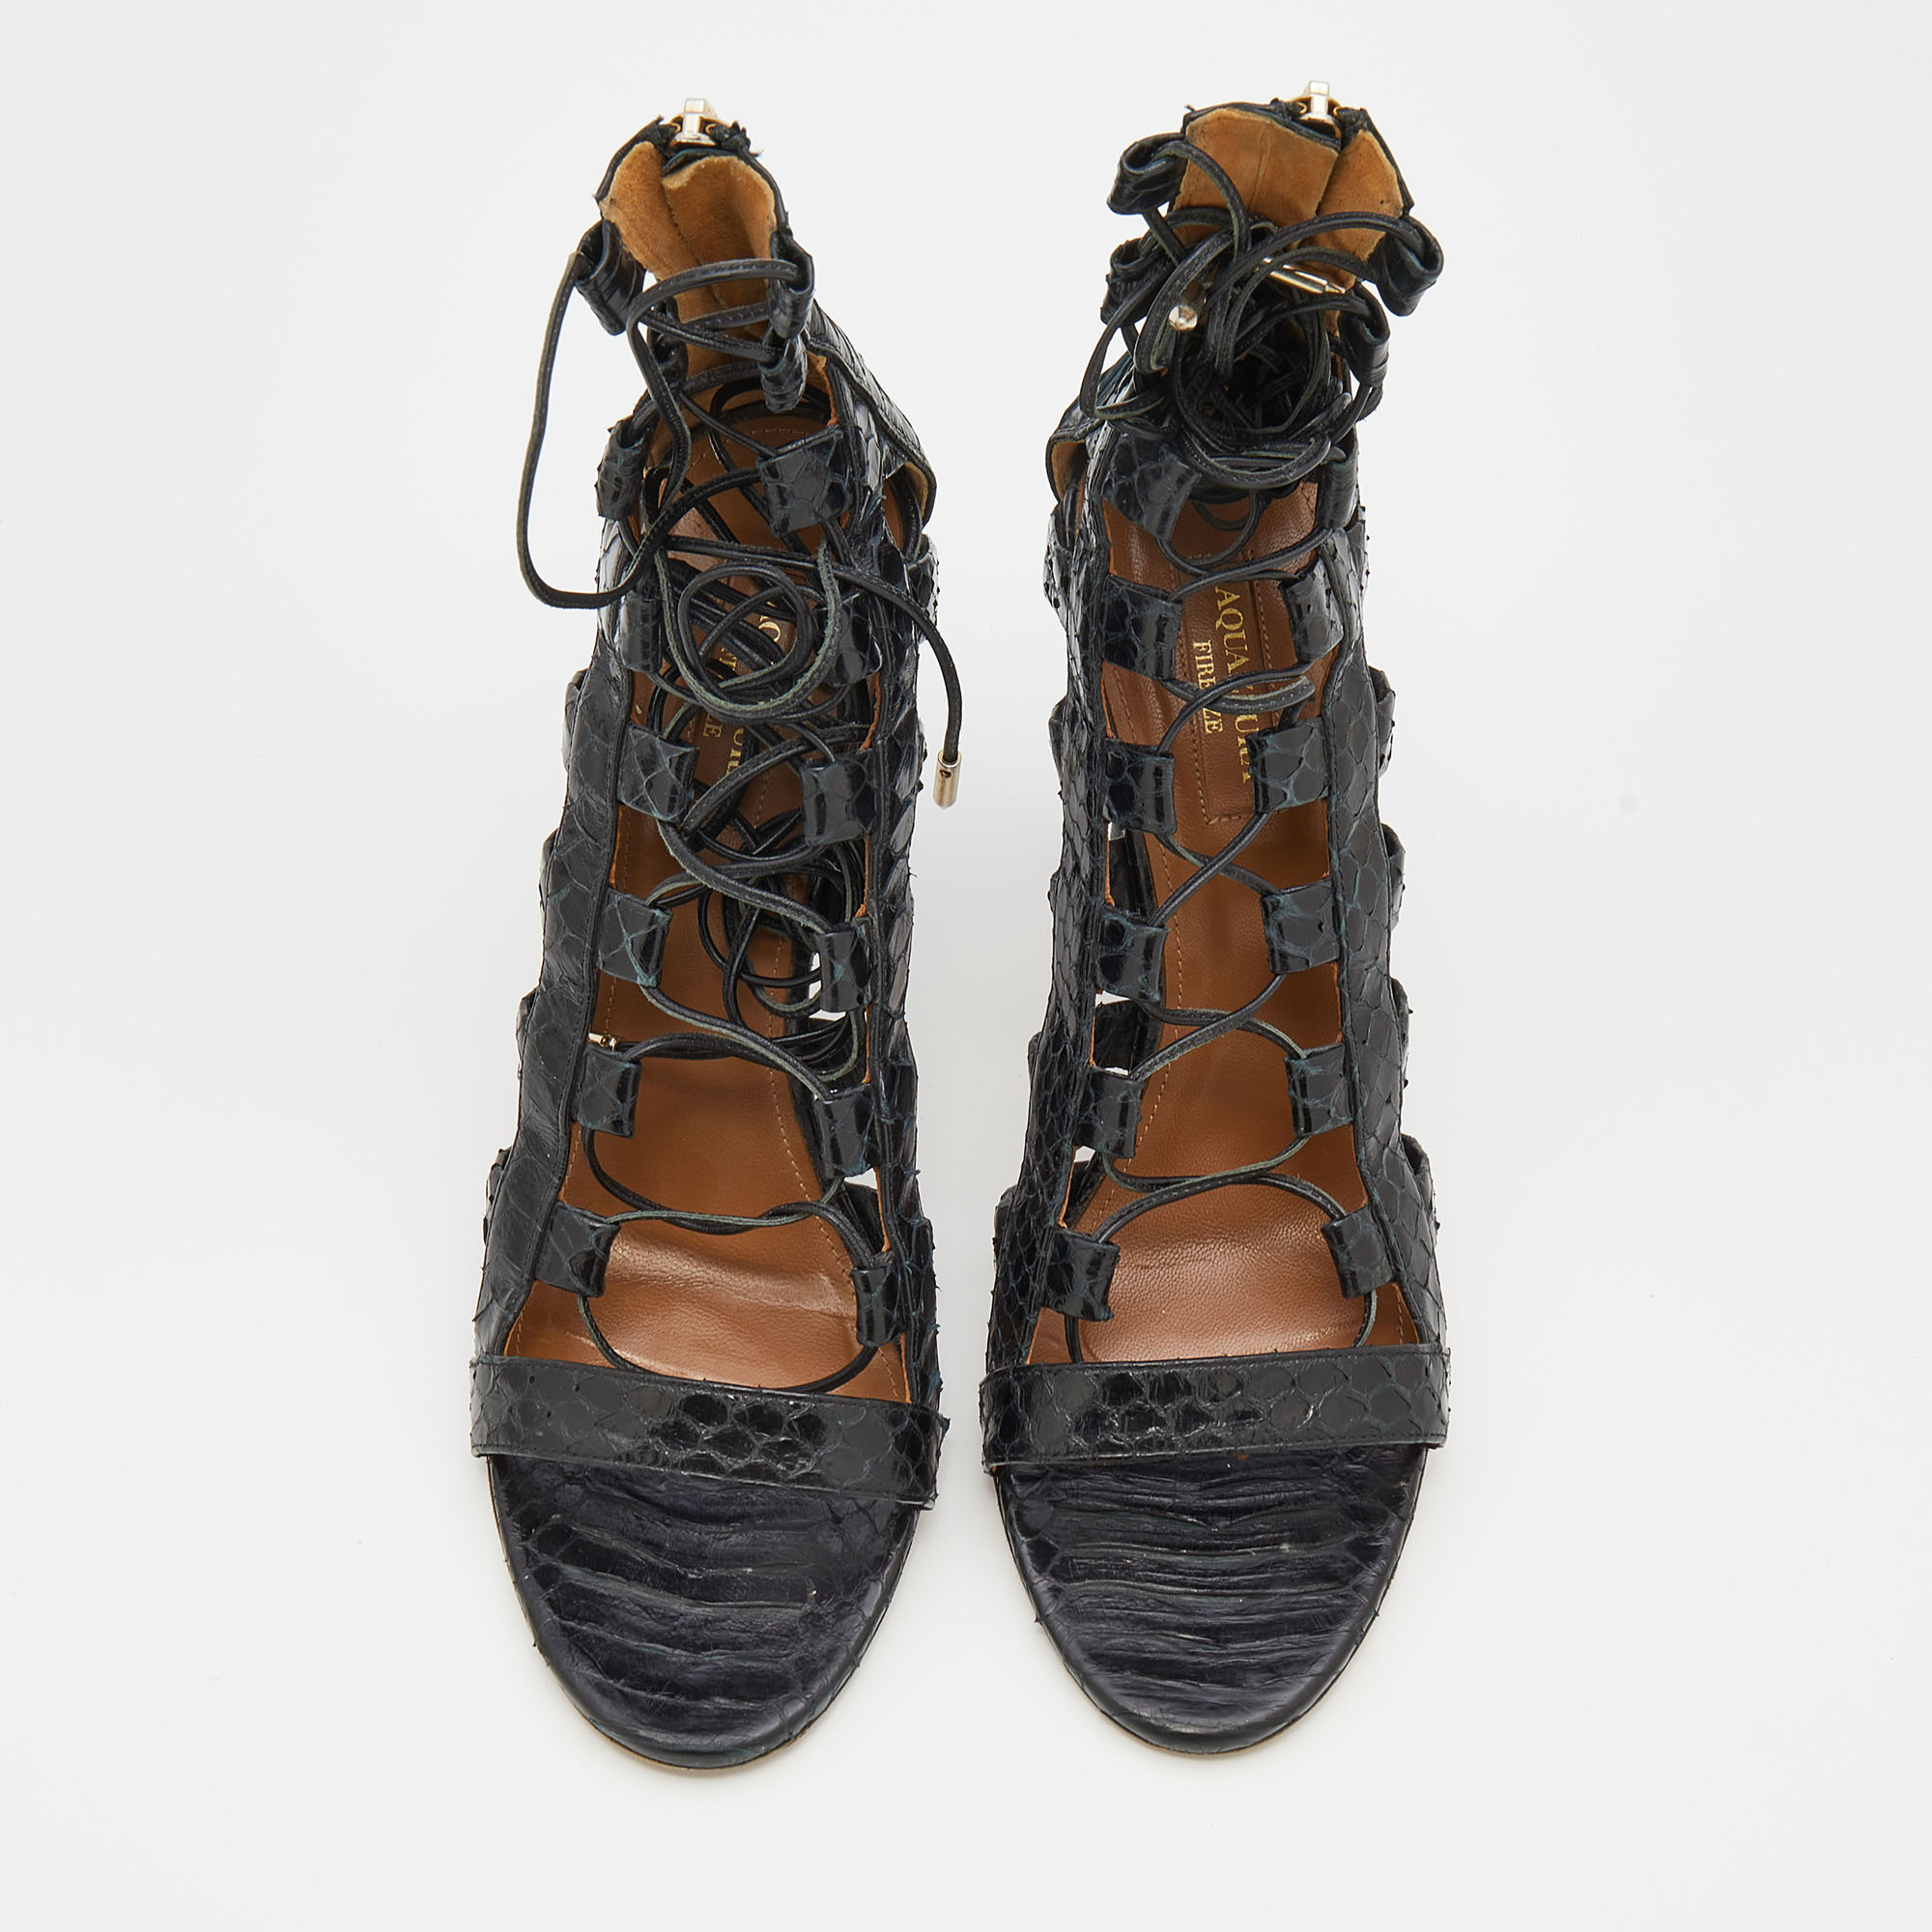 Aquazzura Black Watersnake Leather Amazon Lace Up Open Toe Sandals Size 36